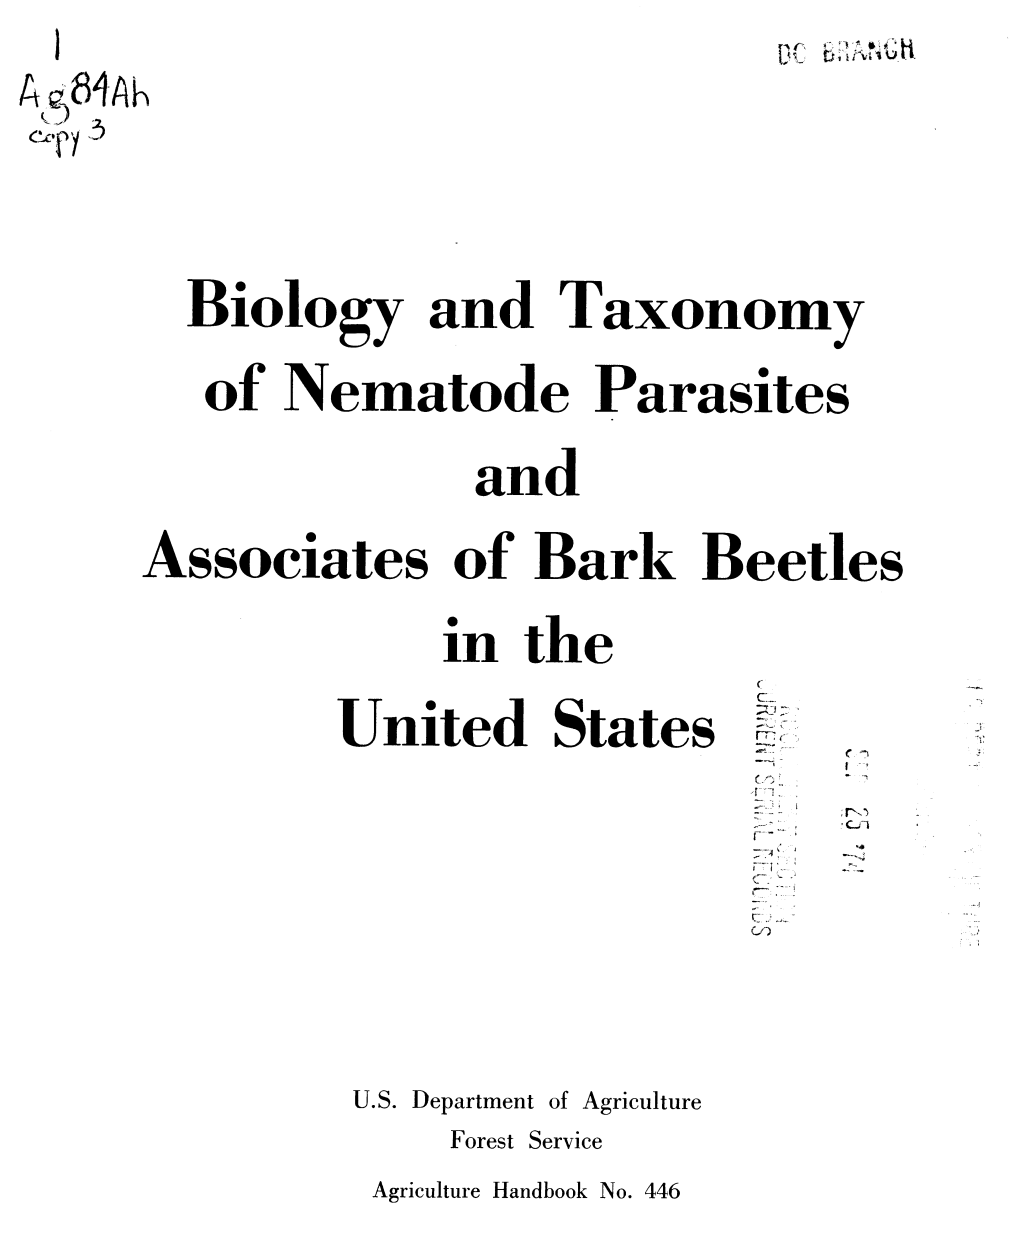 Biology and Taxonomy of Nematode Parasites and Associates of Bark